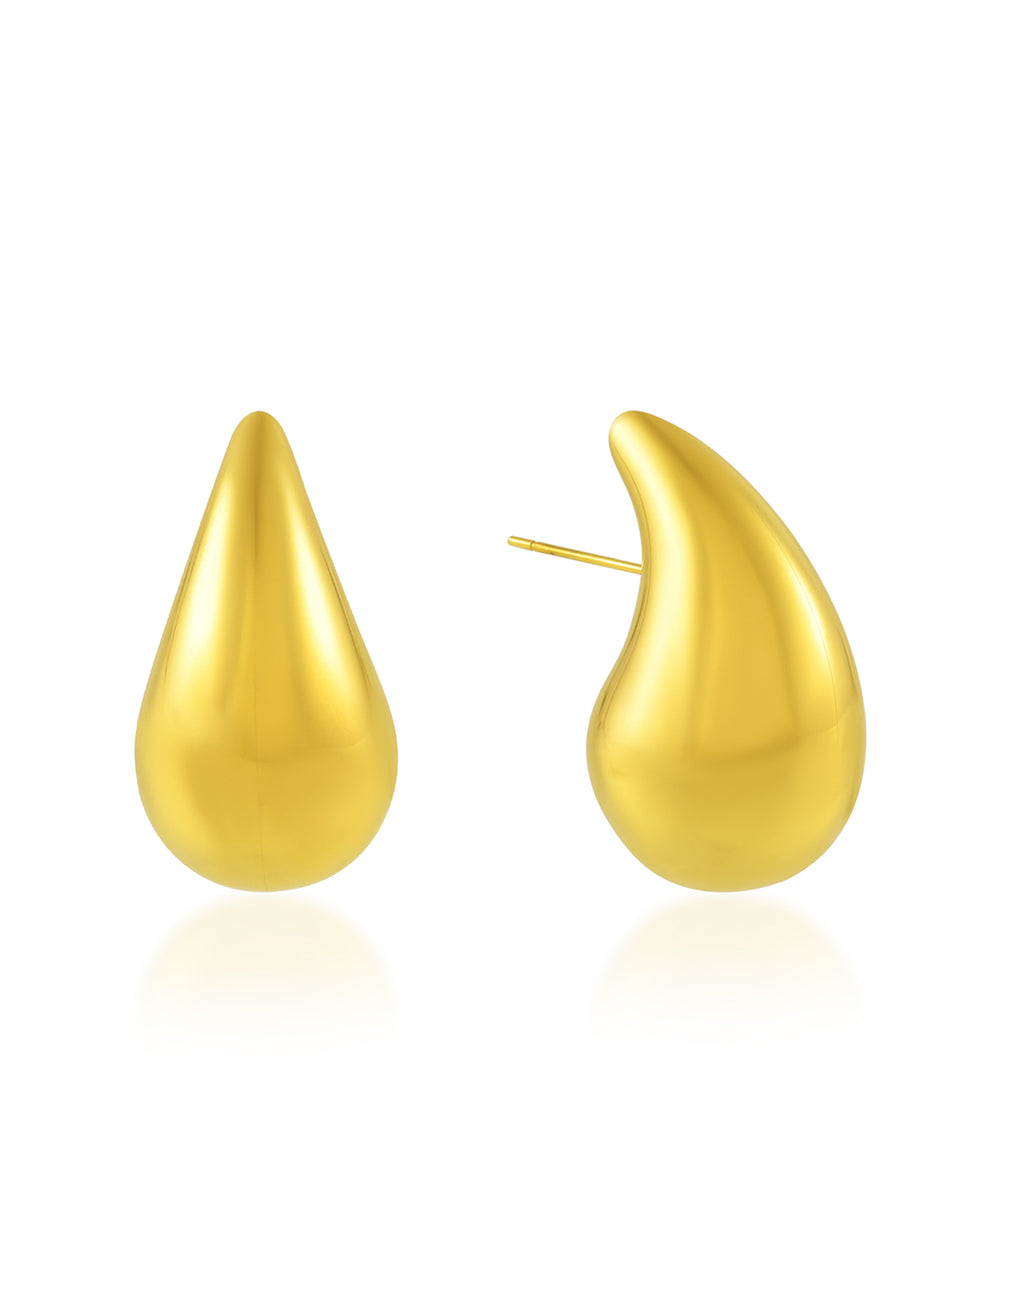 Water Drop Earrings - Statement Earrings - Gold-Plated & Hypoallergenic Jewellery - Made in India - Dubai Jewellery - Dori